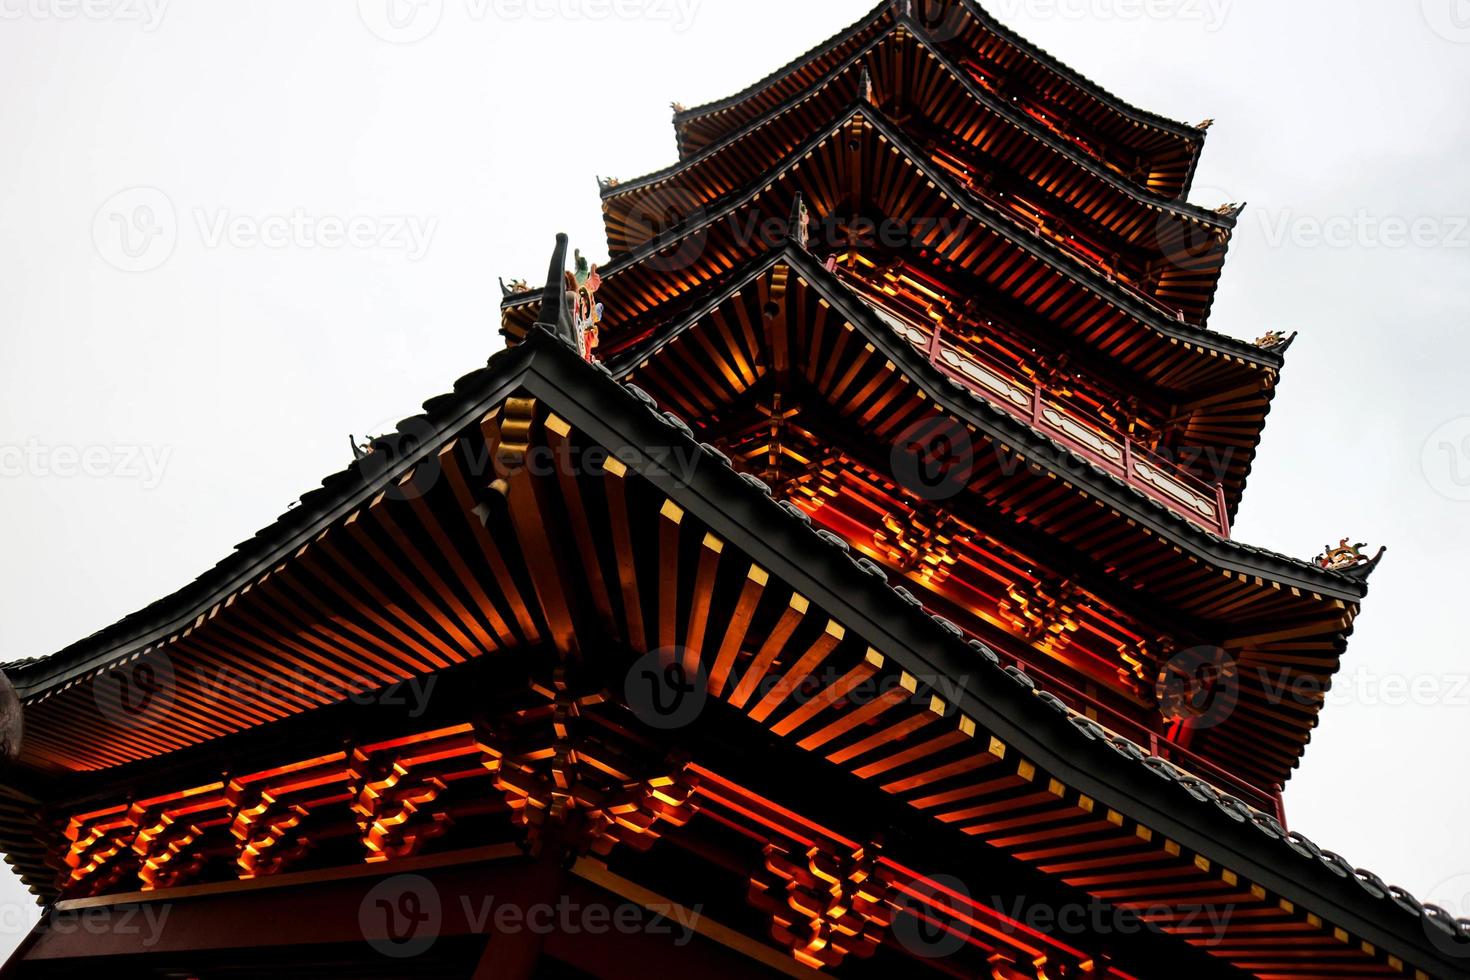 il pagoda è nel il mezzo di chinatown pik pantjorano, pantalone inda kapuk. foto